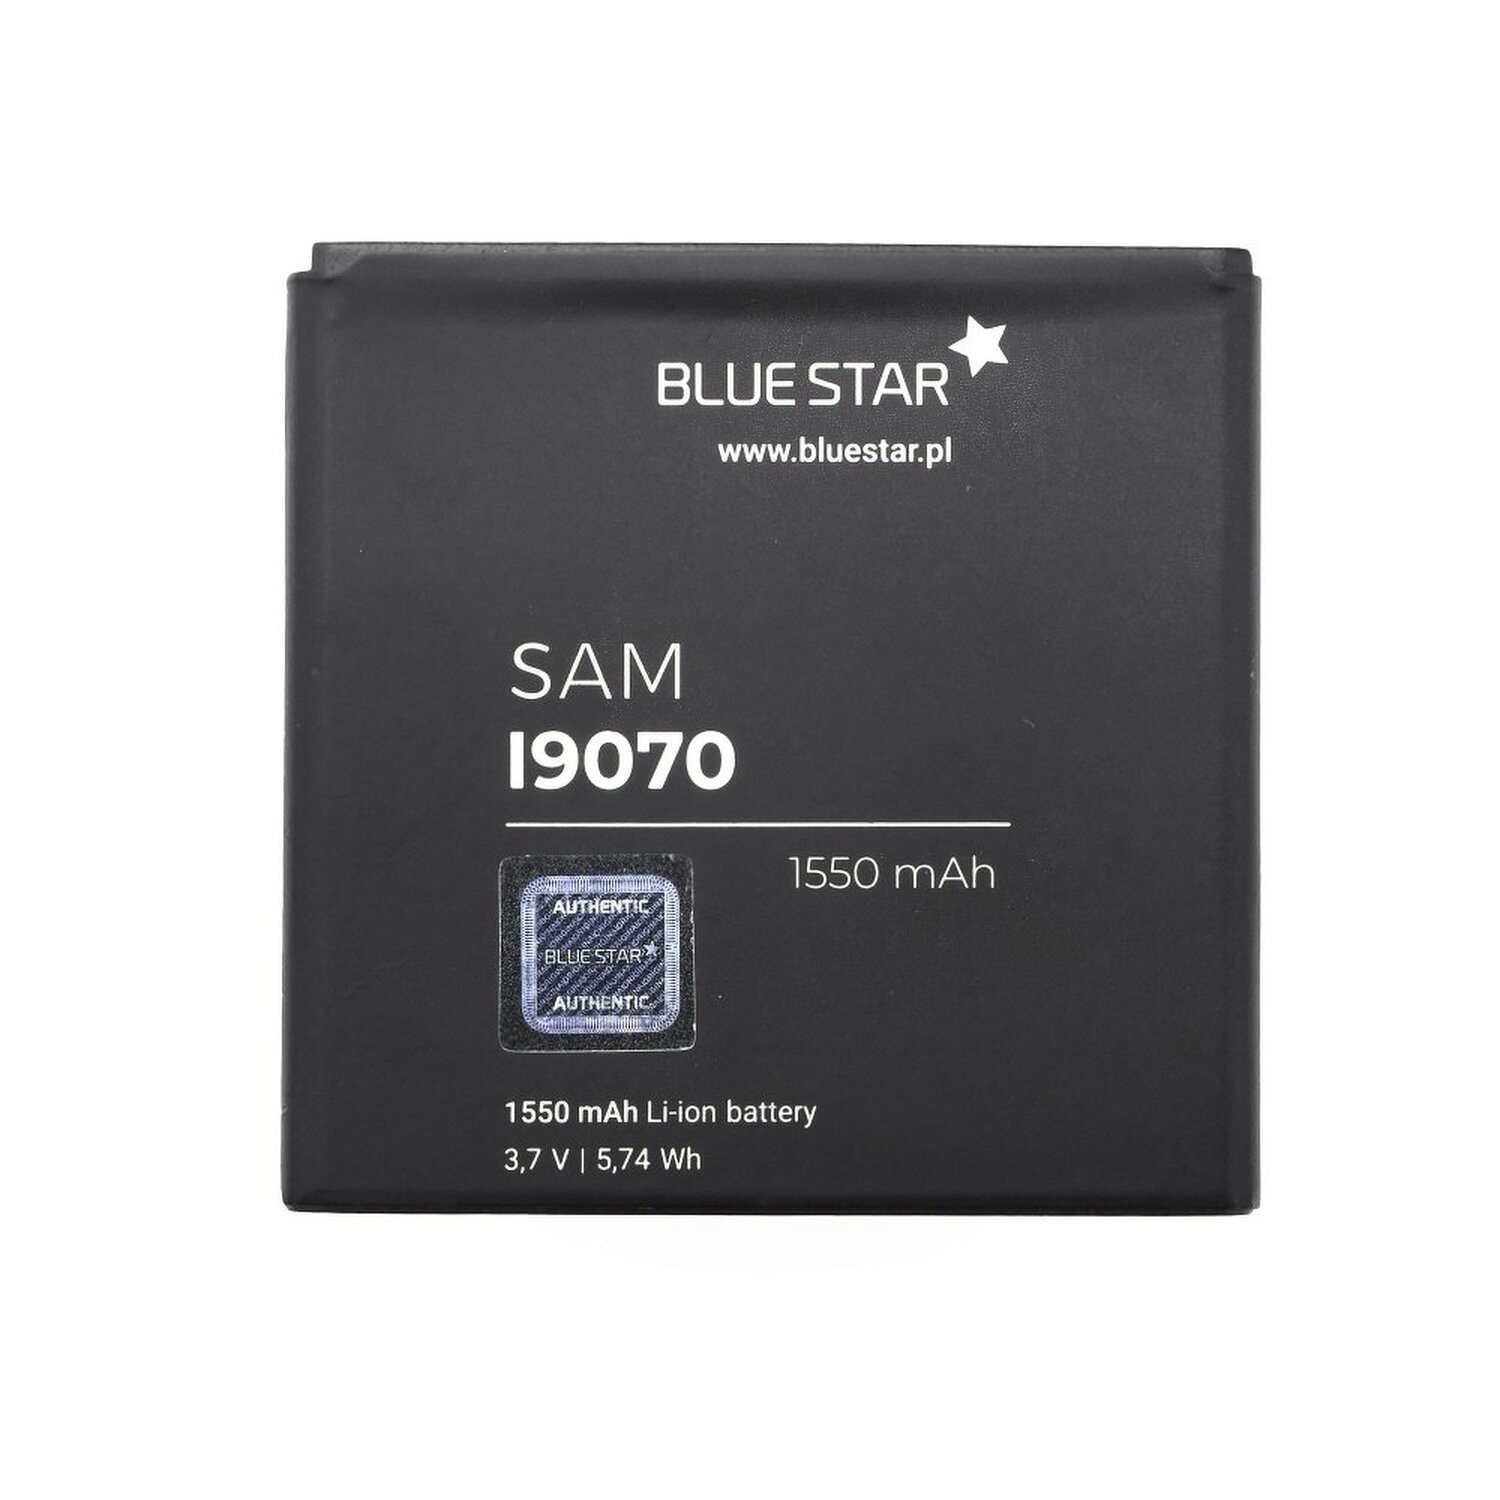 BLUESTAR Akku für Samsung Galaxy Handyakku I9070 Advance Li-Ion S